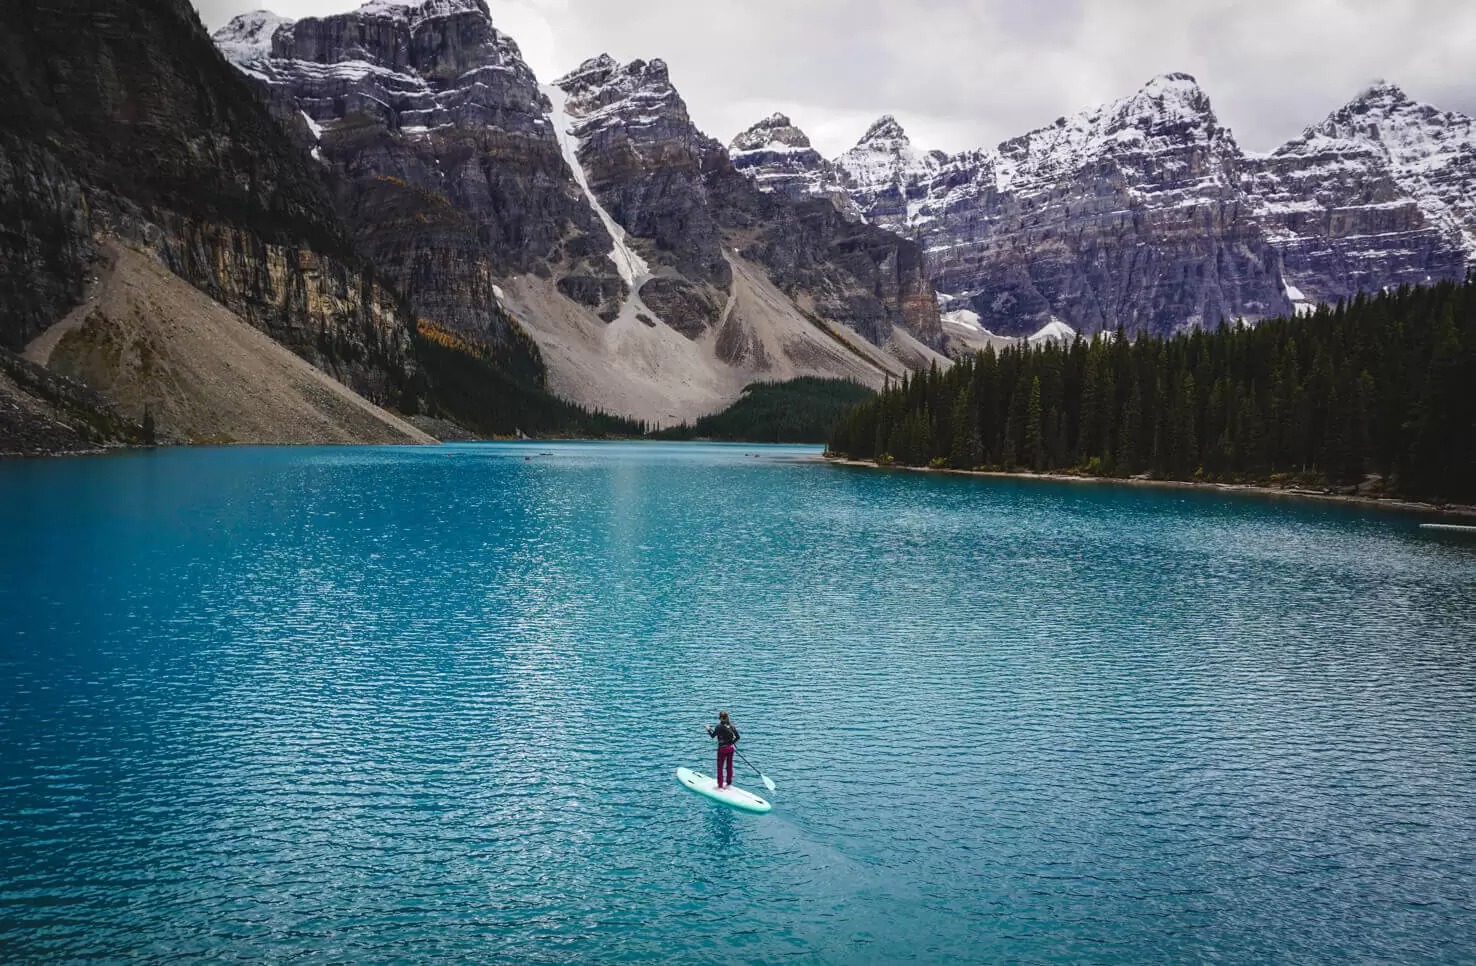 Stand up paddleboarding on Moraine Lake, Banff National Park